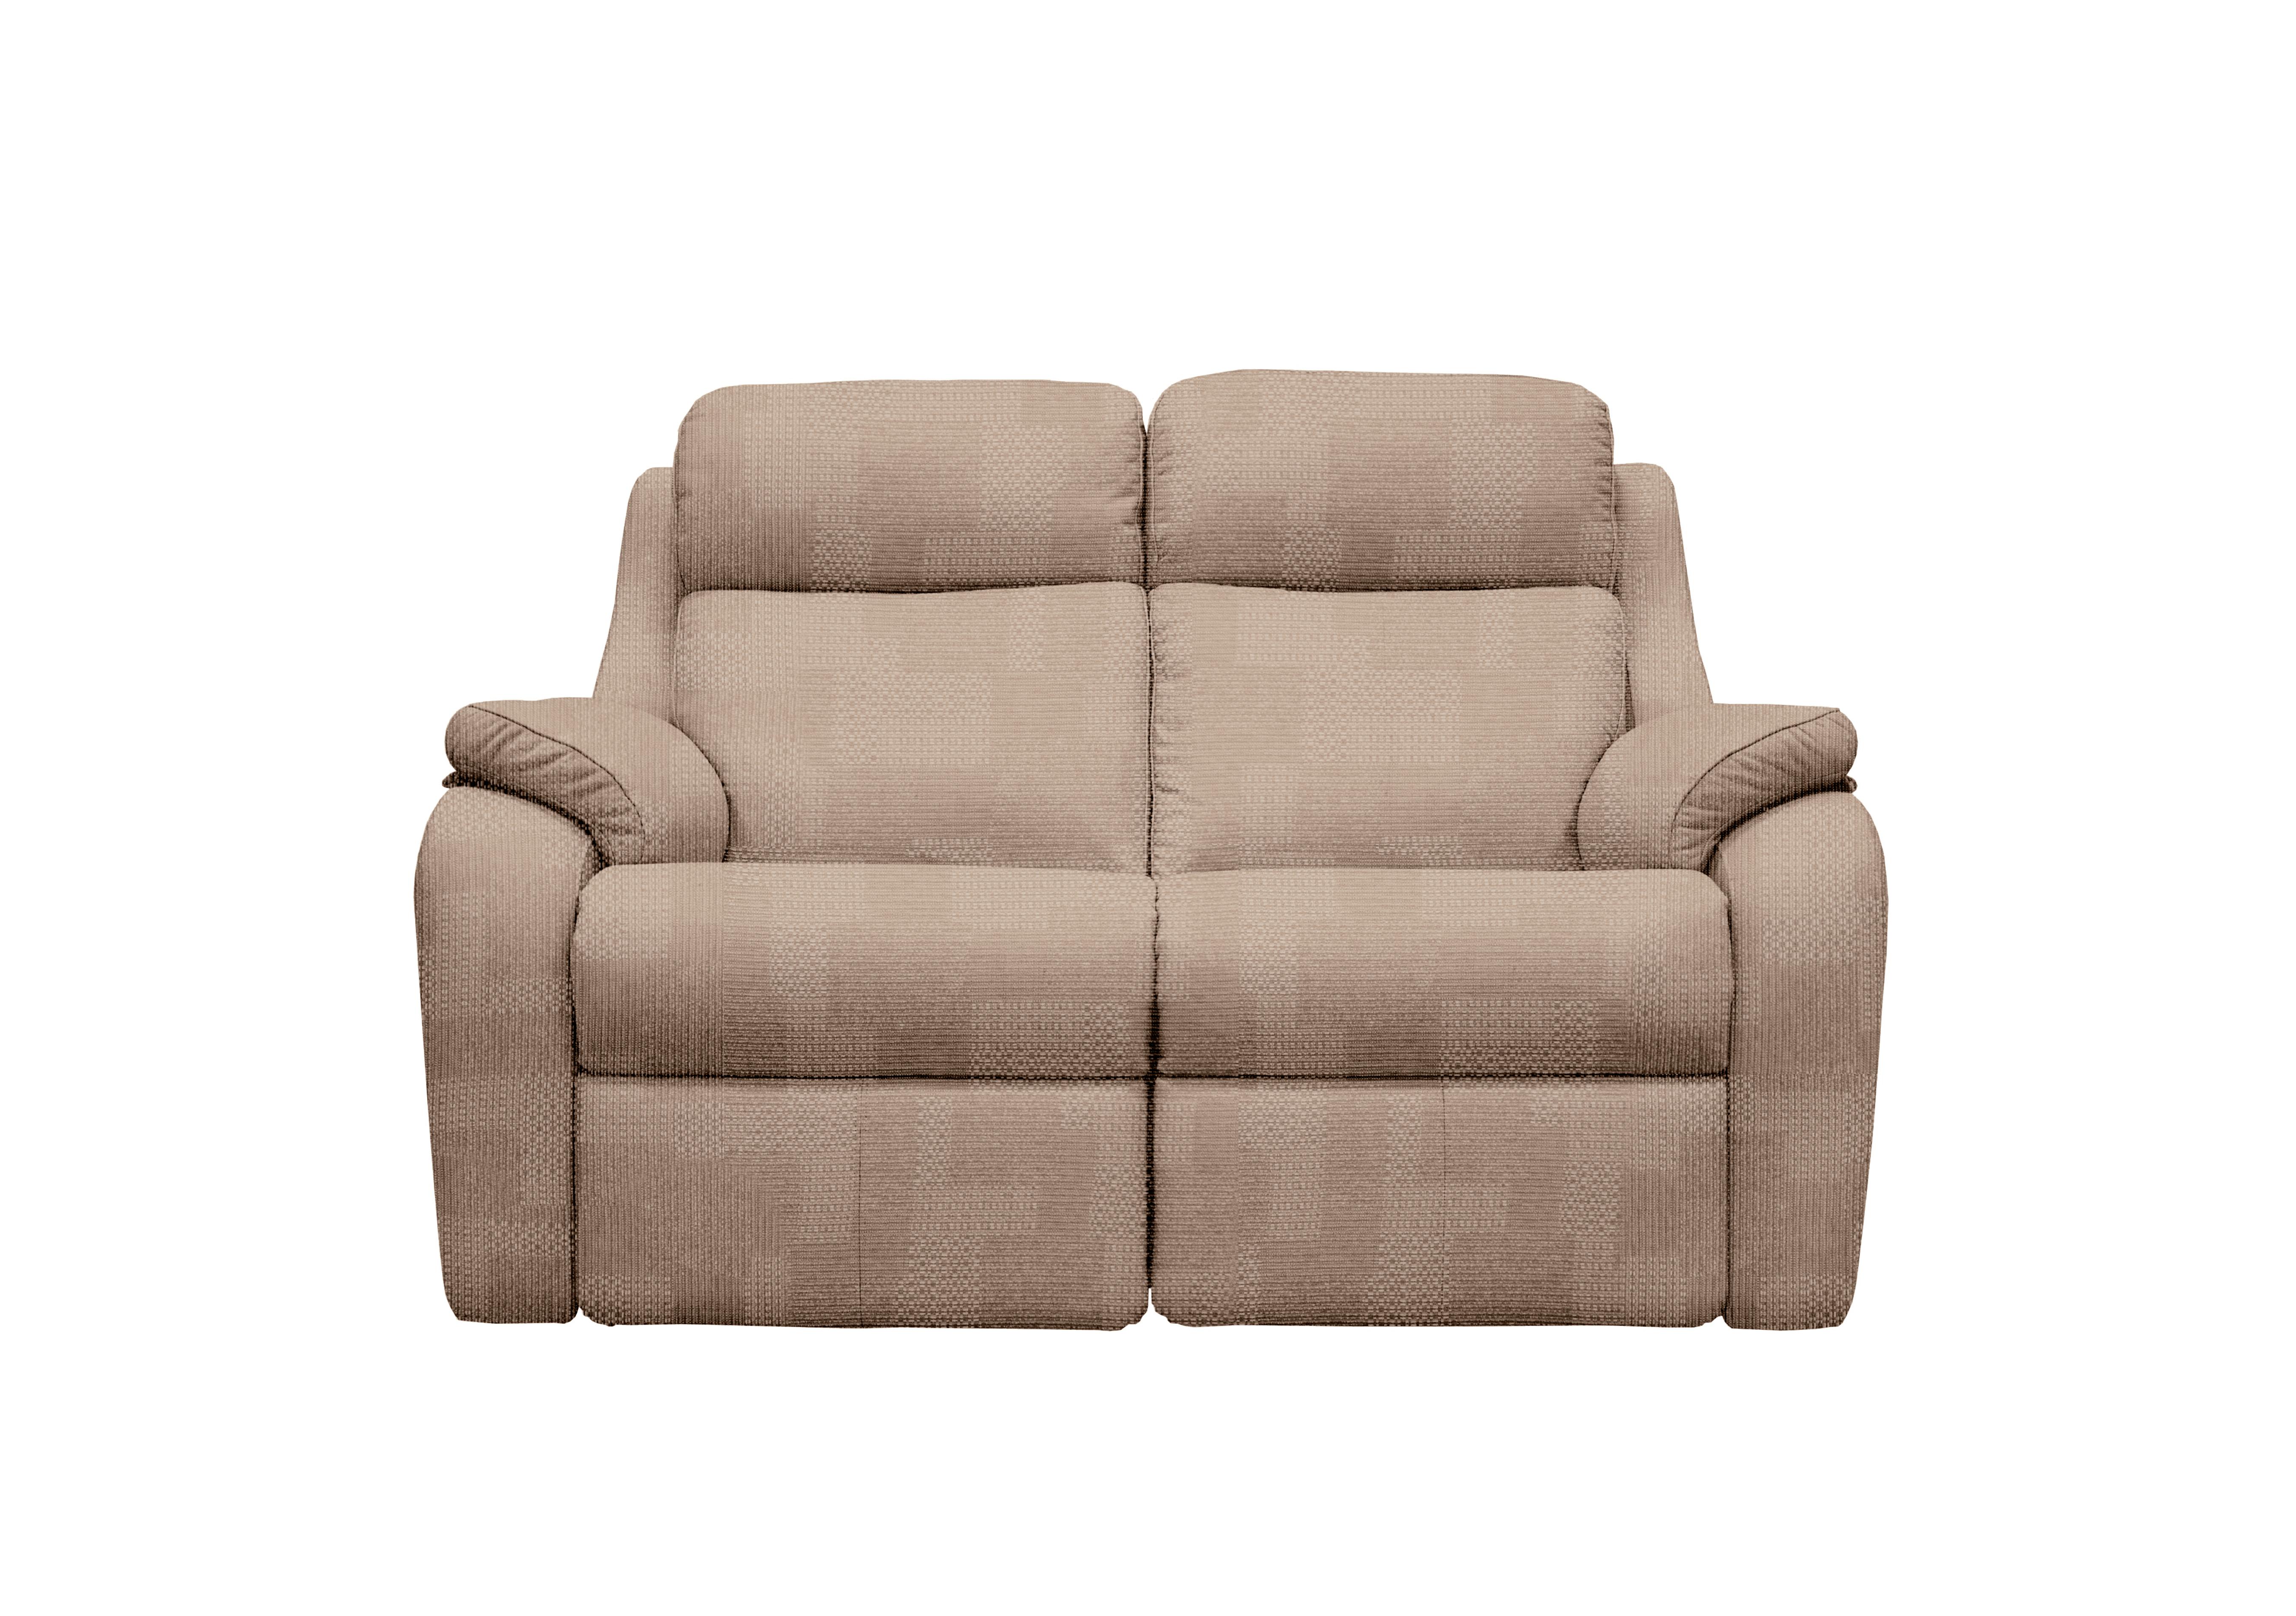 Kingsbury 2 Seater Fabric Sofa in A800 Faro Sand on Furniture Village